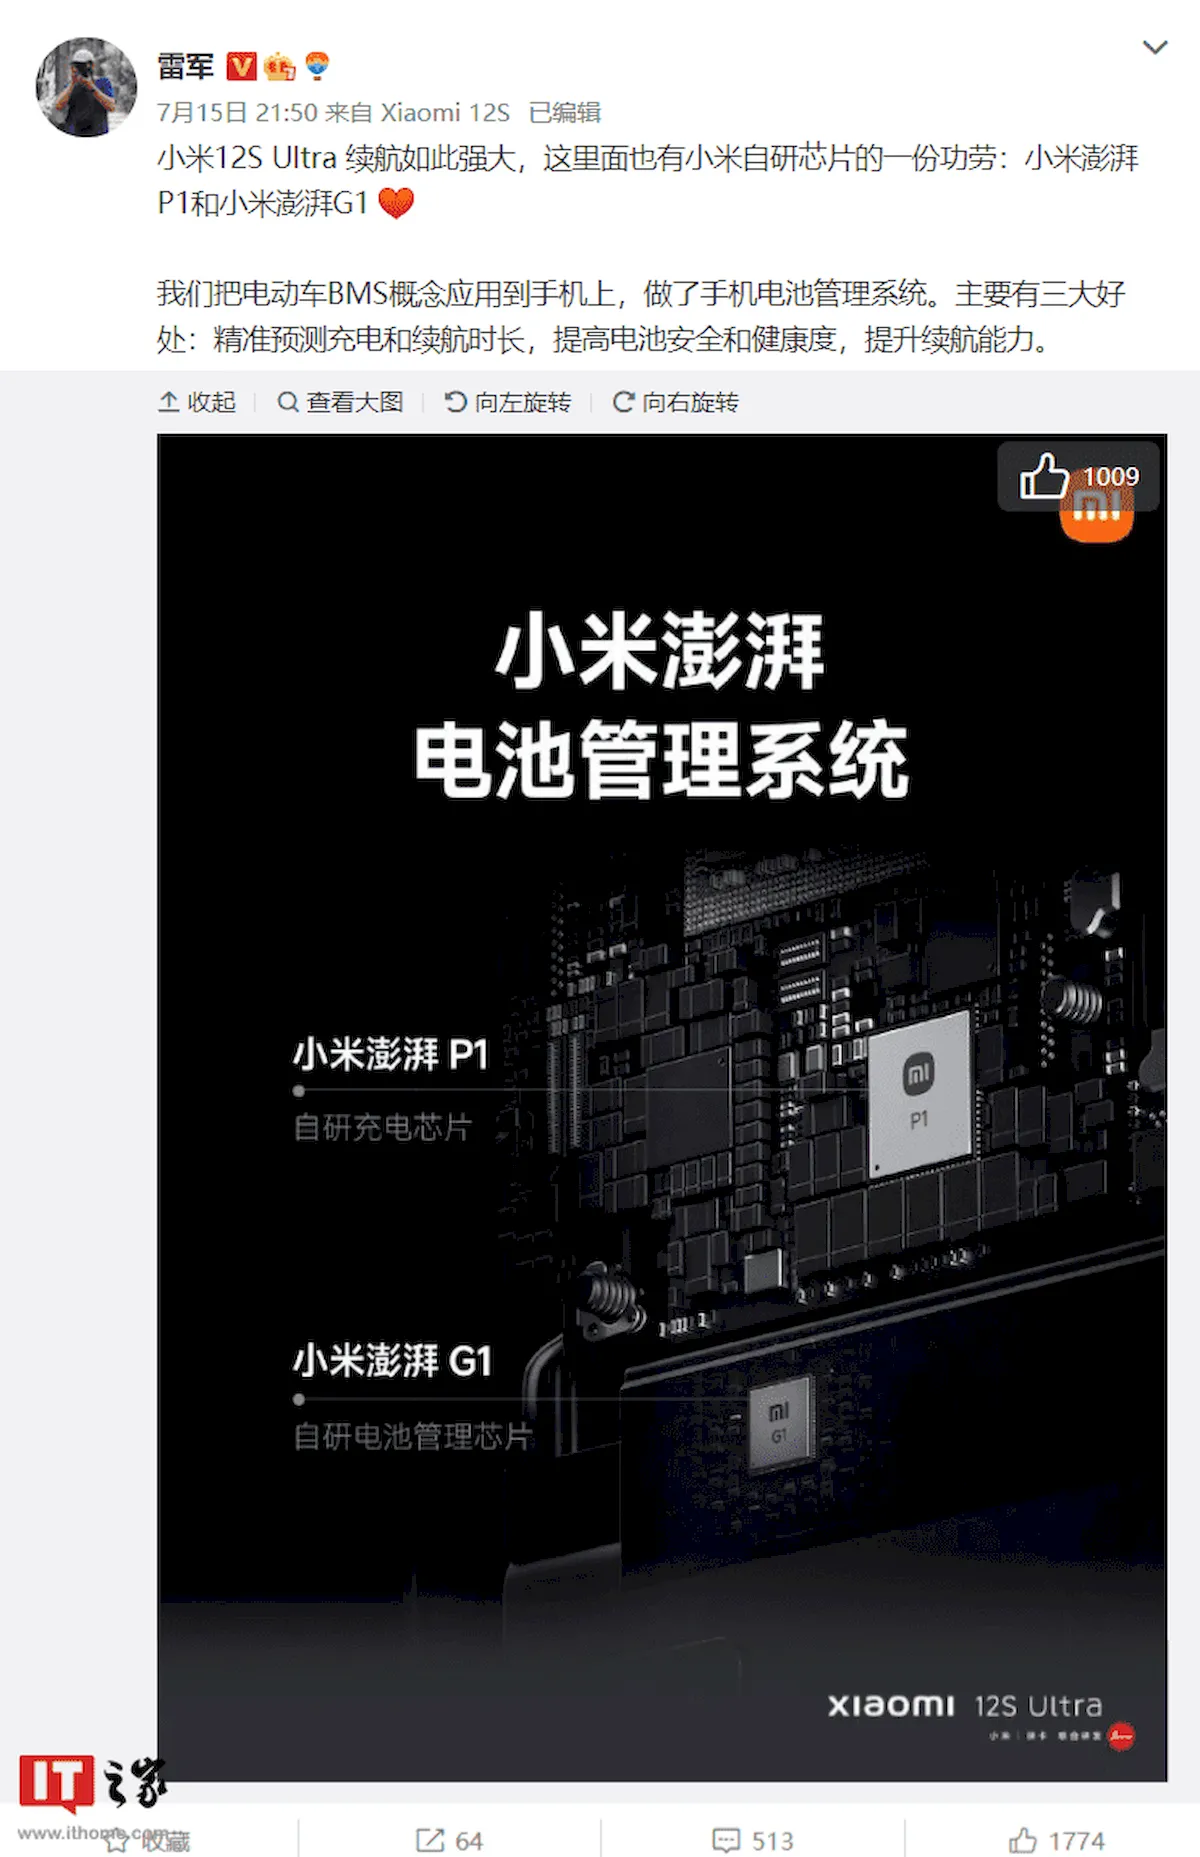 Bateria do Xiaomi 12S Ultra impressiona